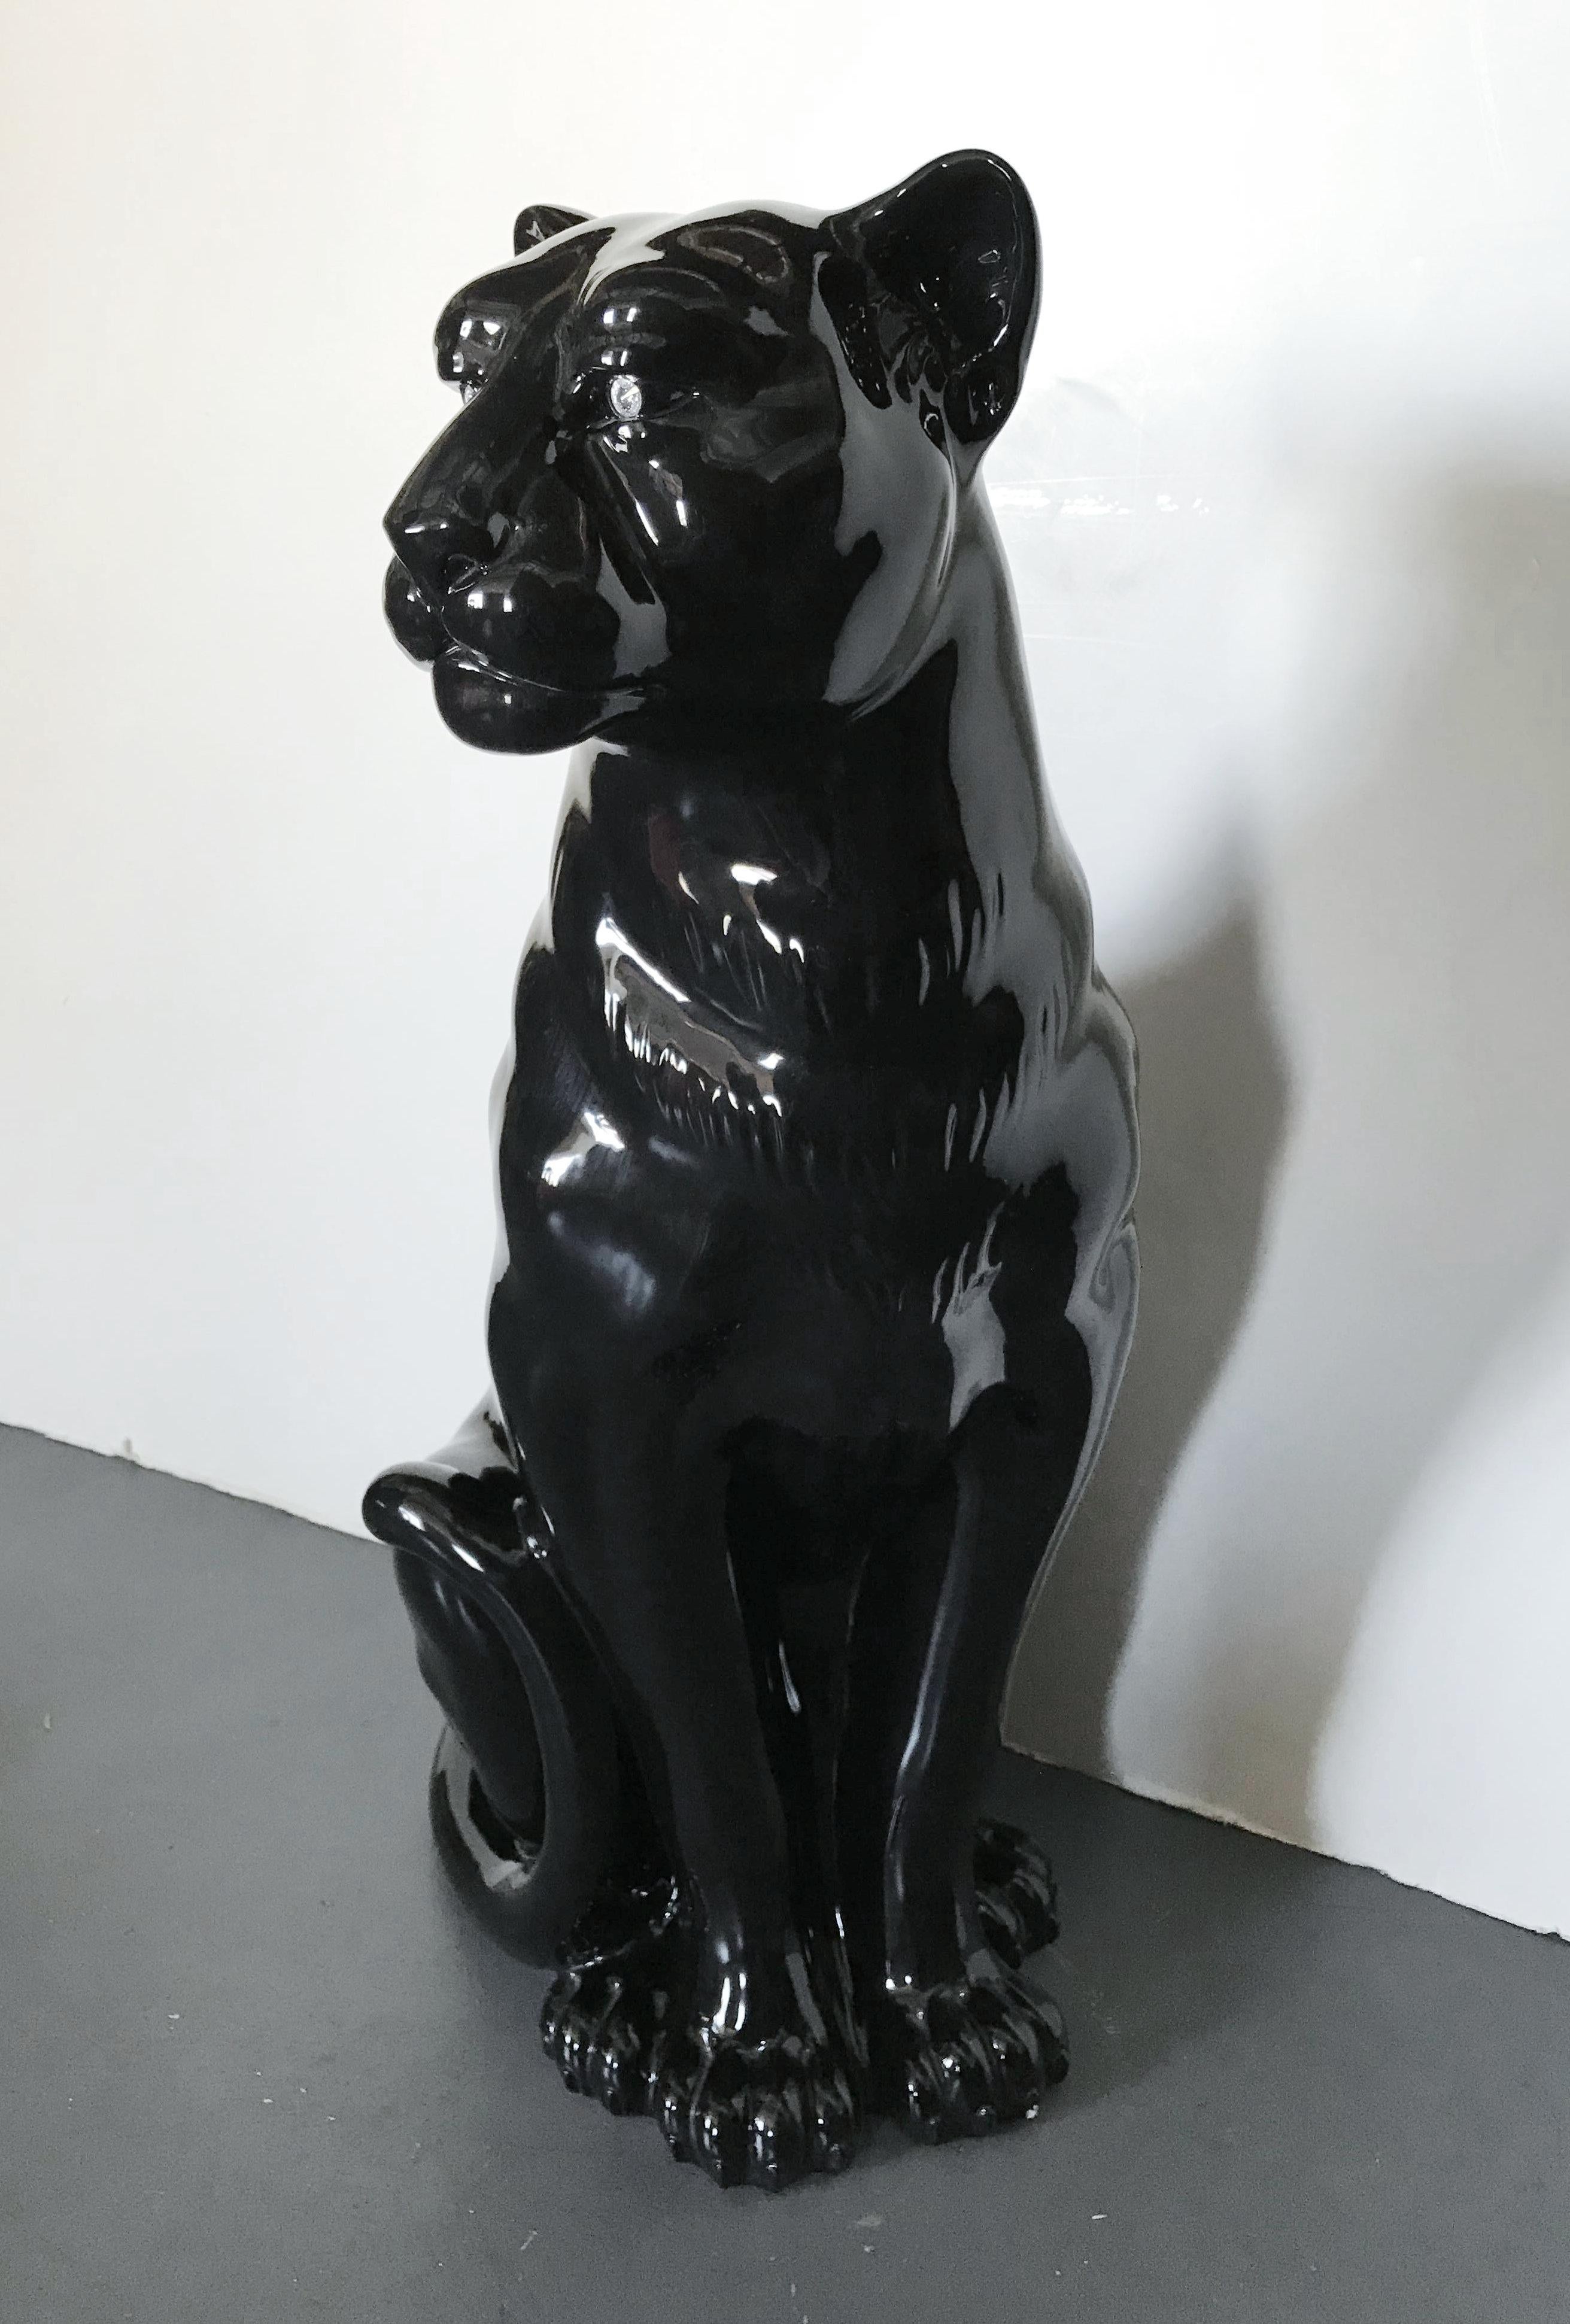 black puma statue